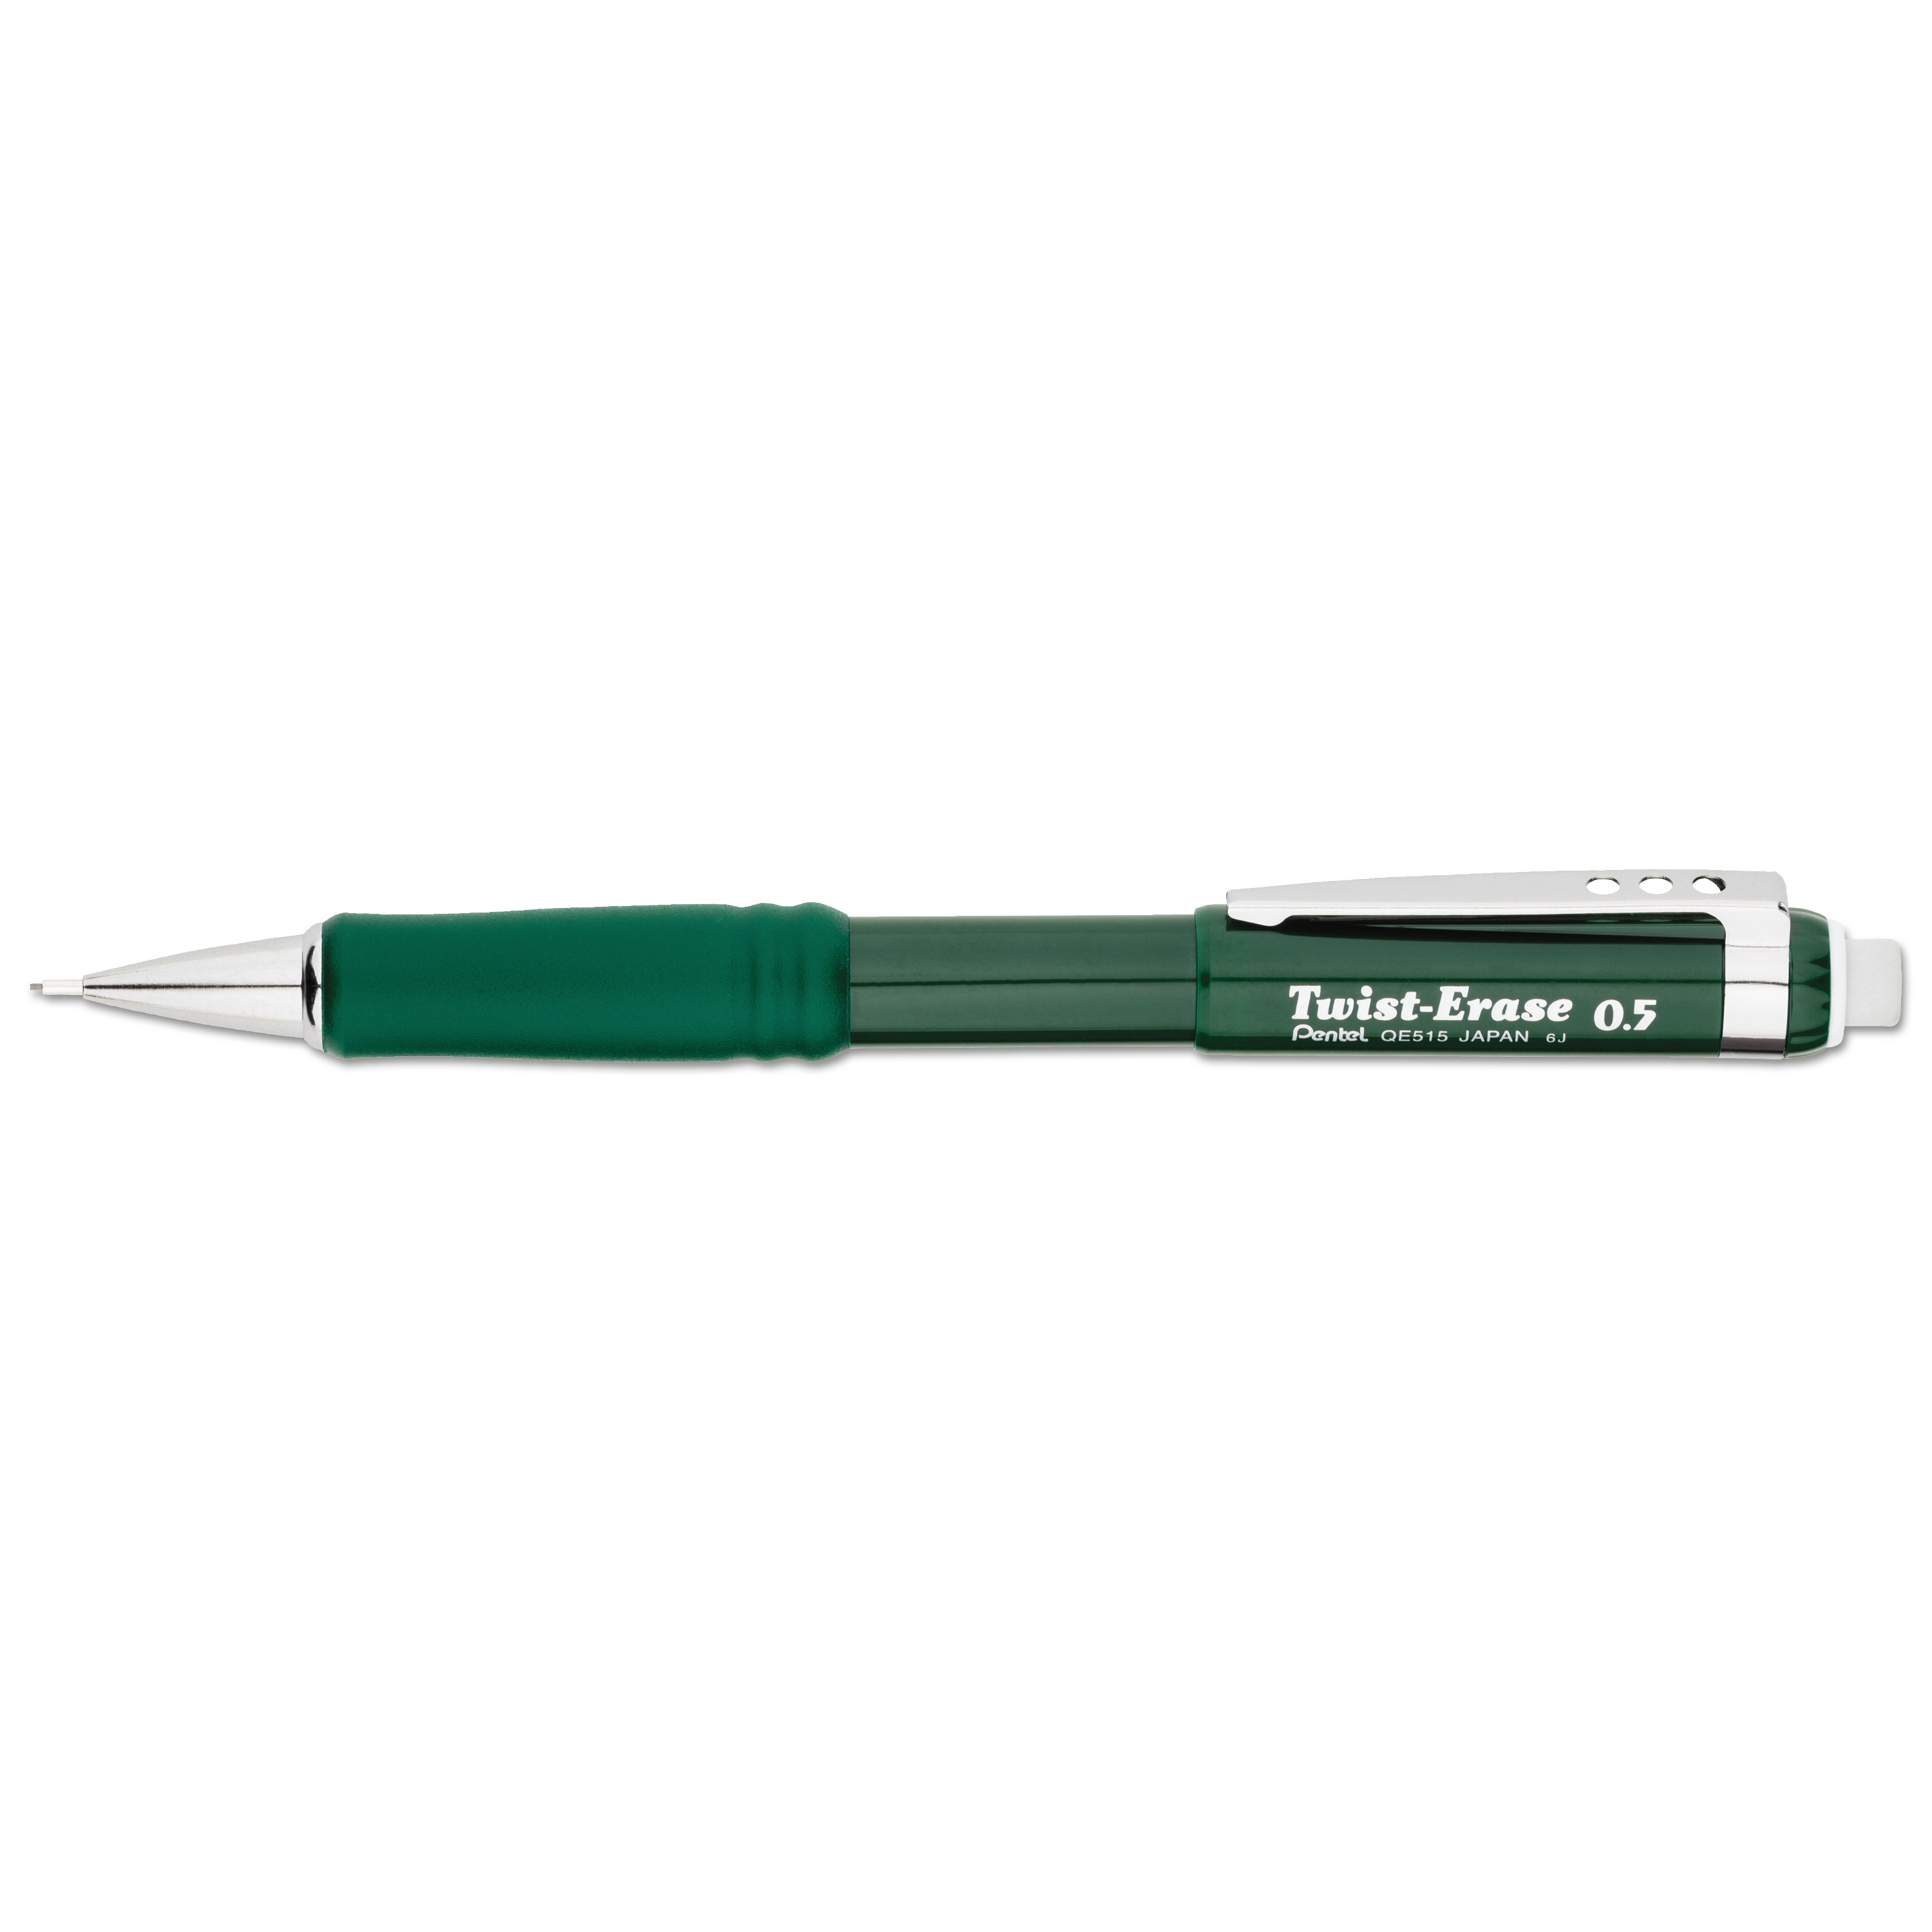 Twist-Erase III Mechanical Pencil, 0.5 mm, Green Barrel